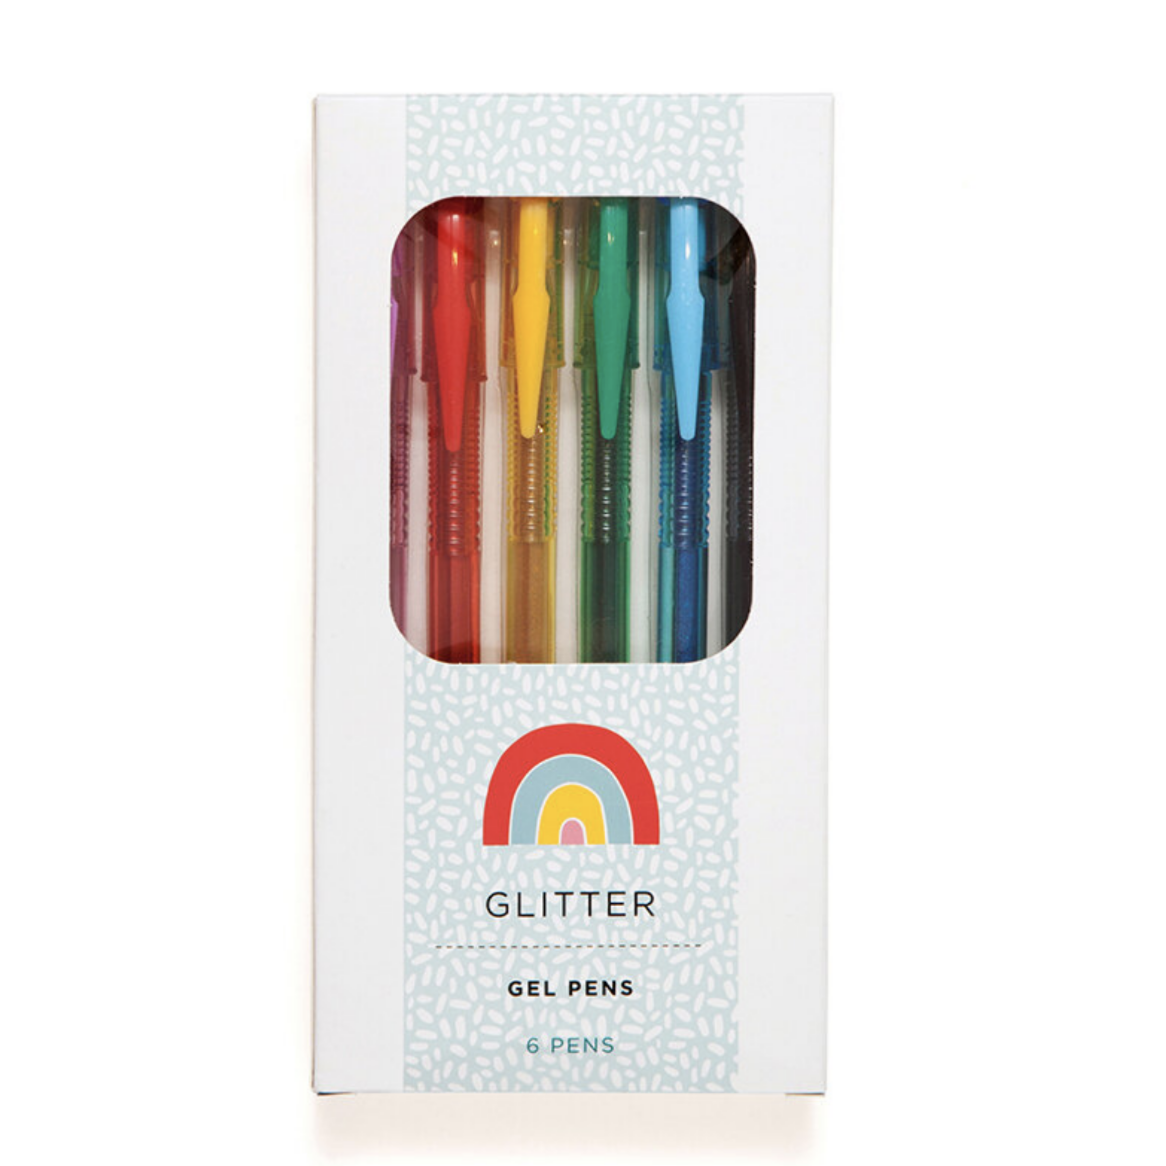 Glitter Gel Pens -Suzy Ultman